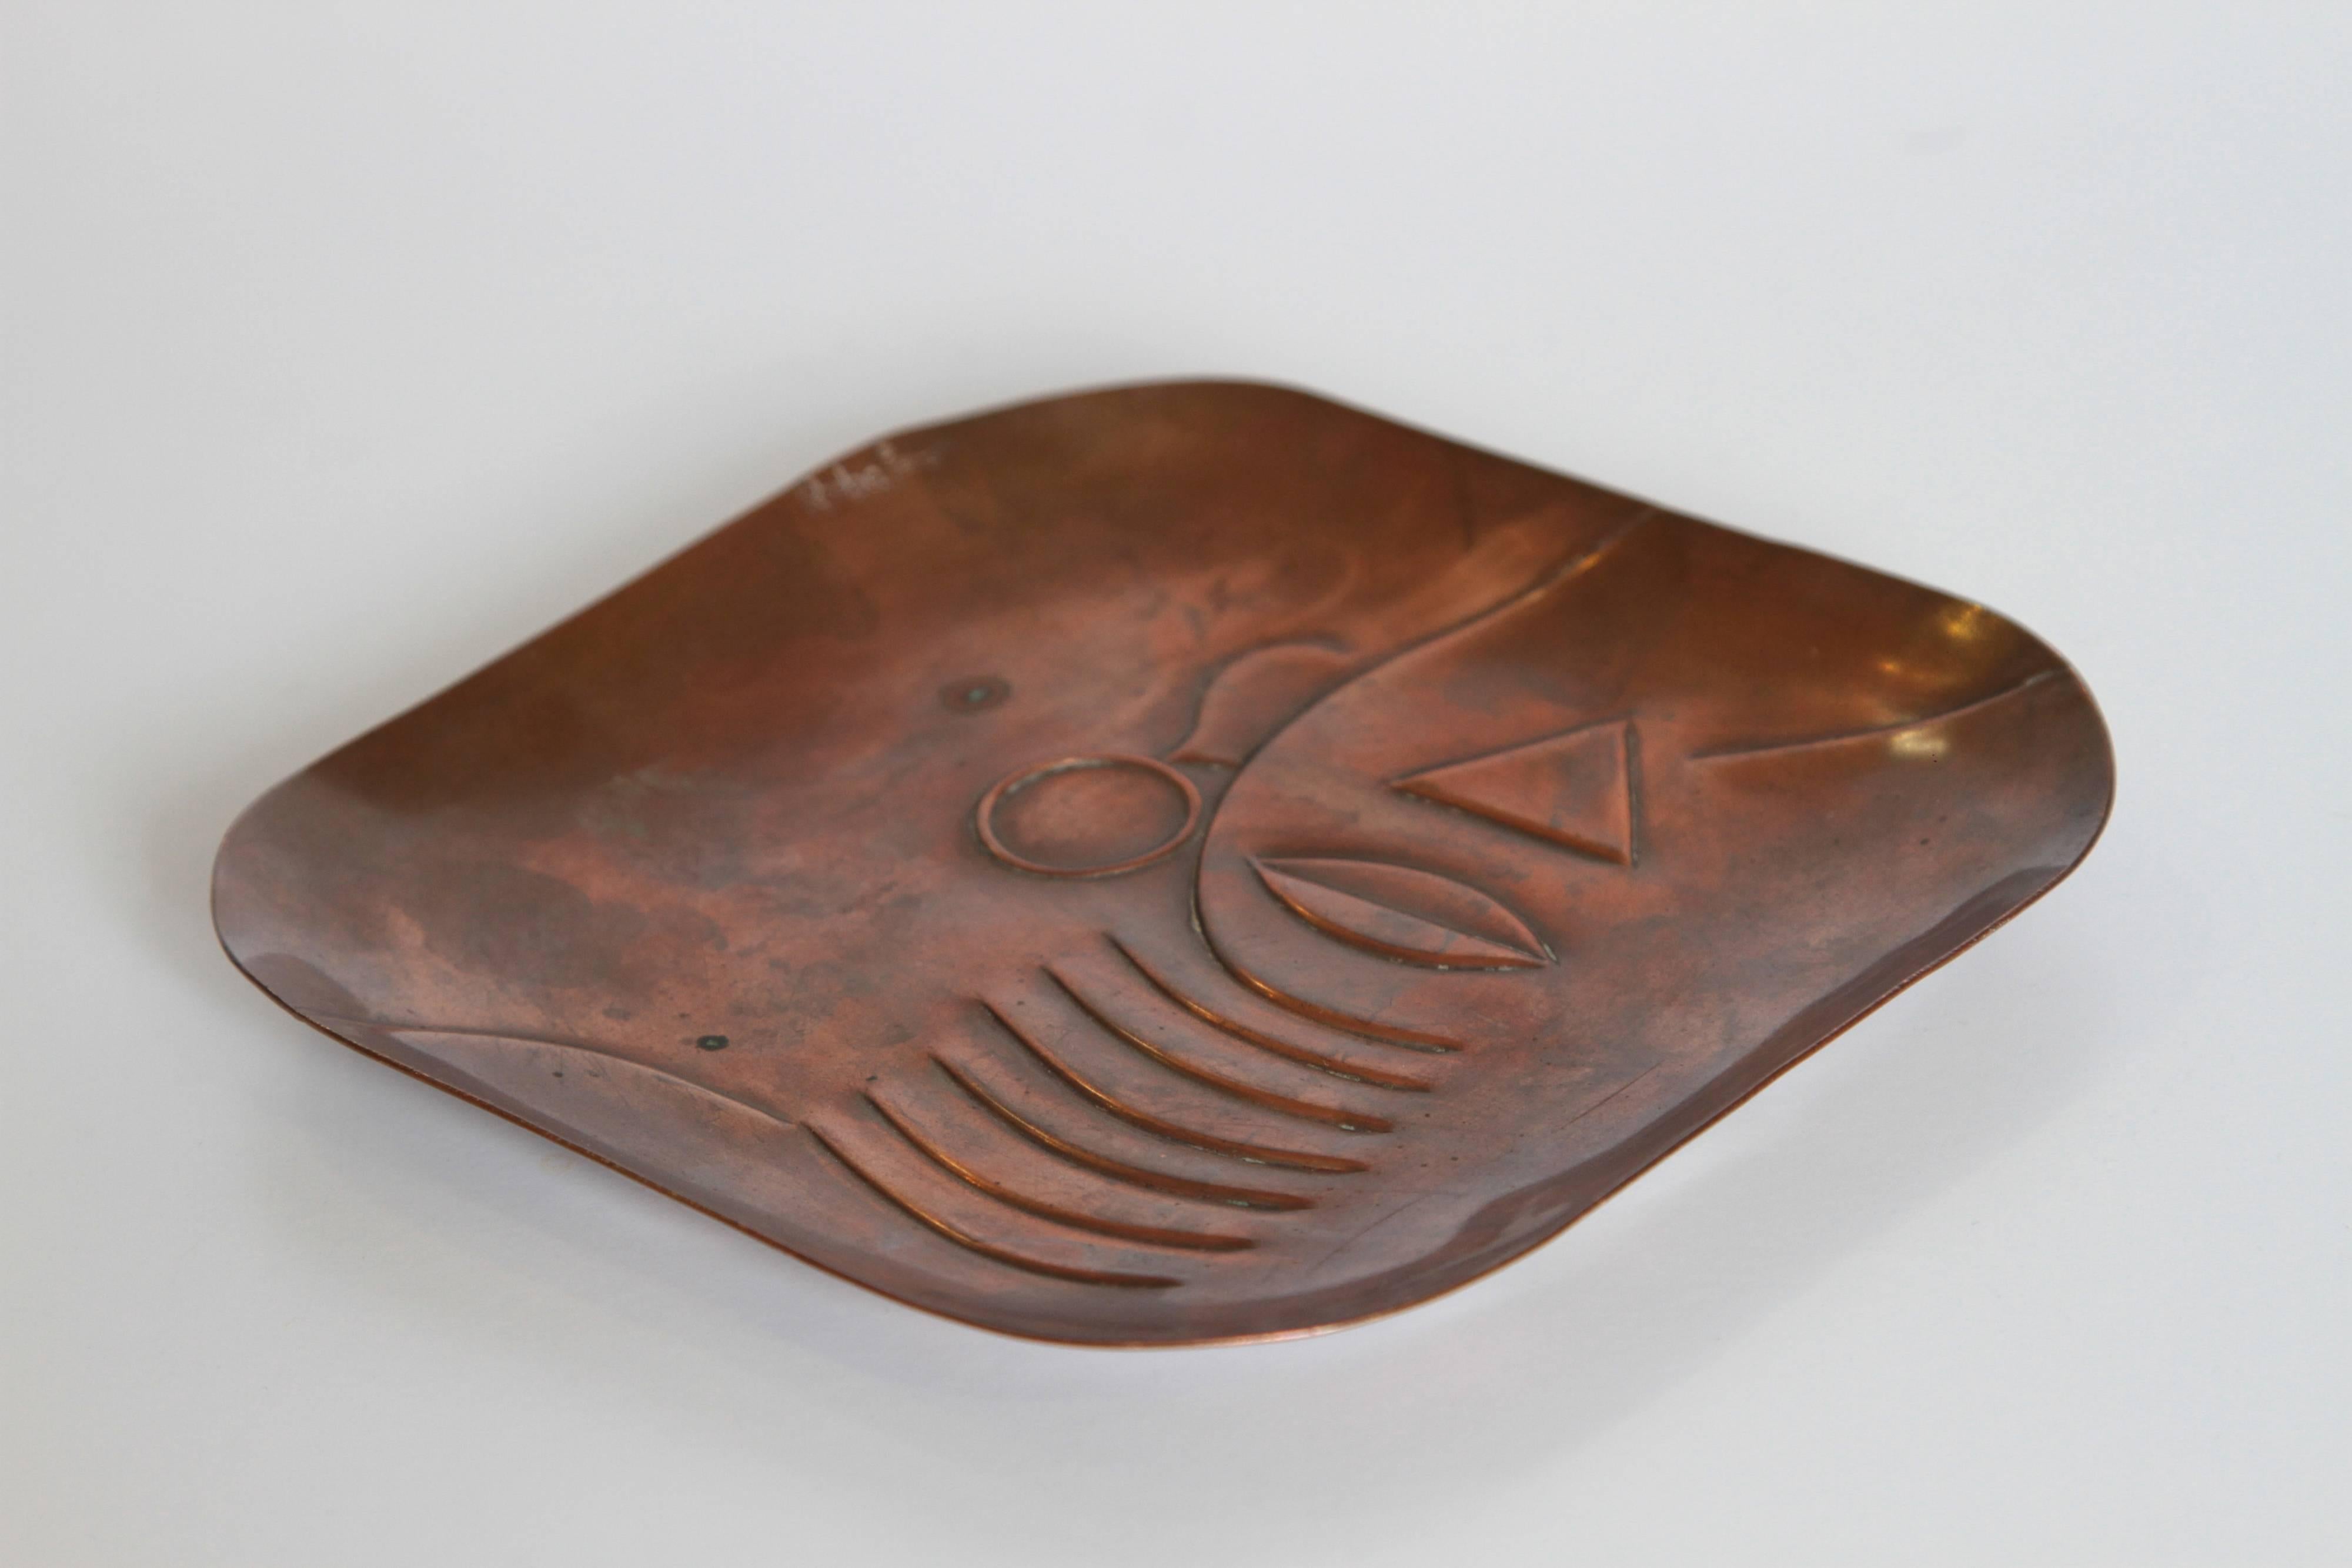 American Midcentury Art Deco Original Rebajes Native Hand-Wrought Copper Tray, Patinated